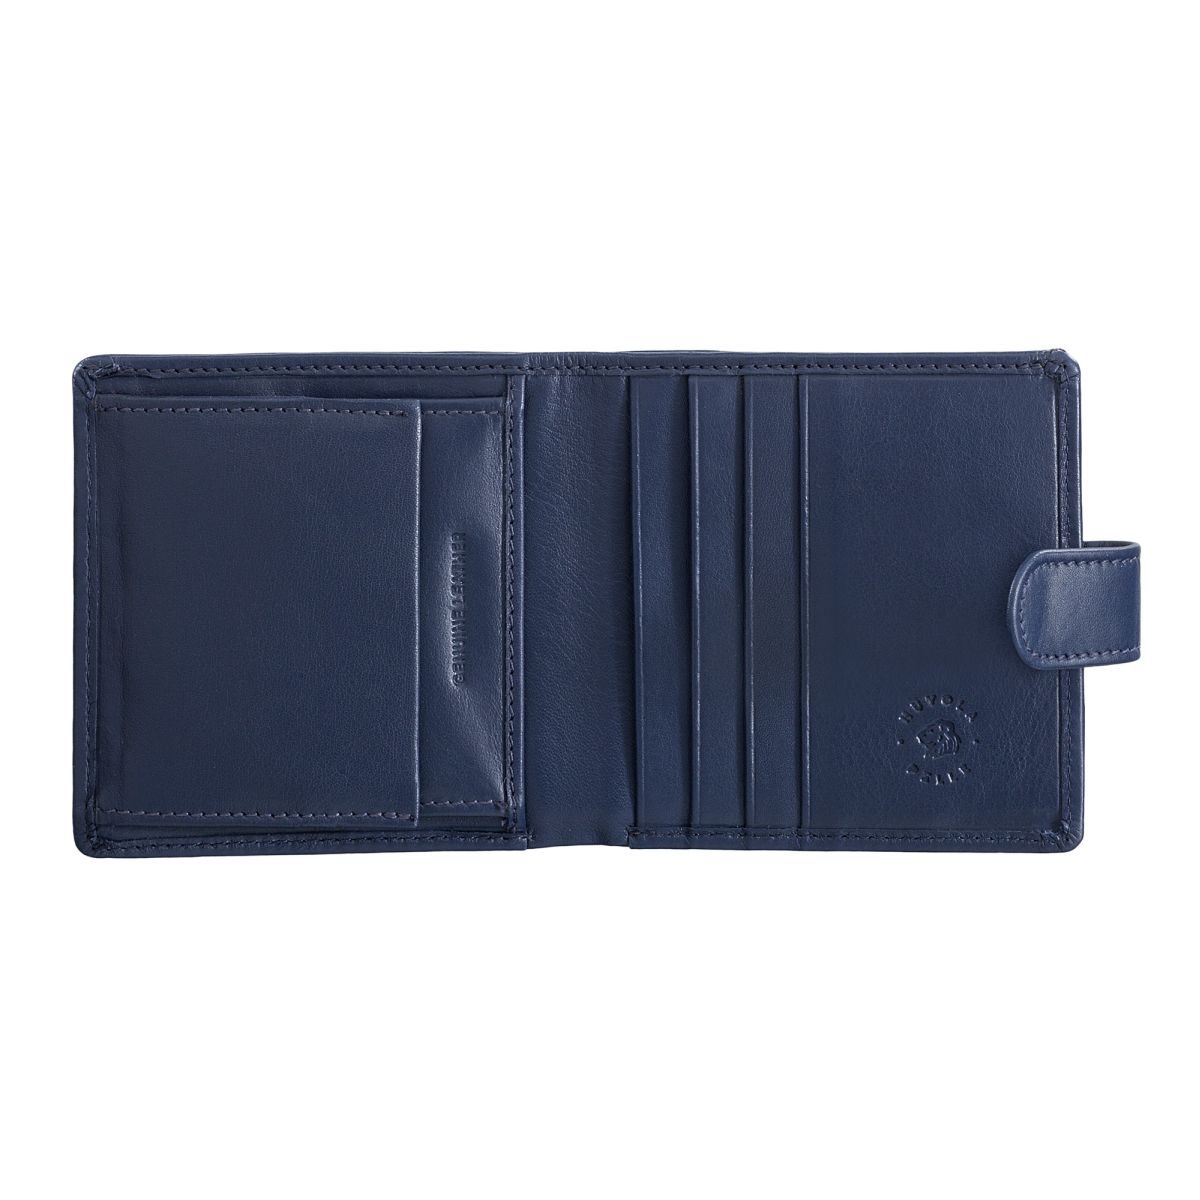 Brand New Unique Design RFID Protected Genuine Leather Wallet For Men Beige  | eBay